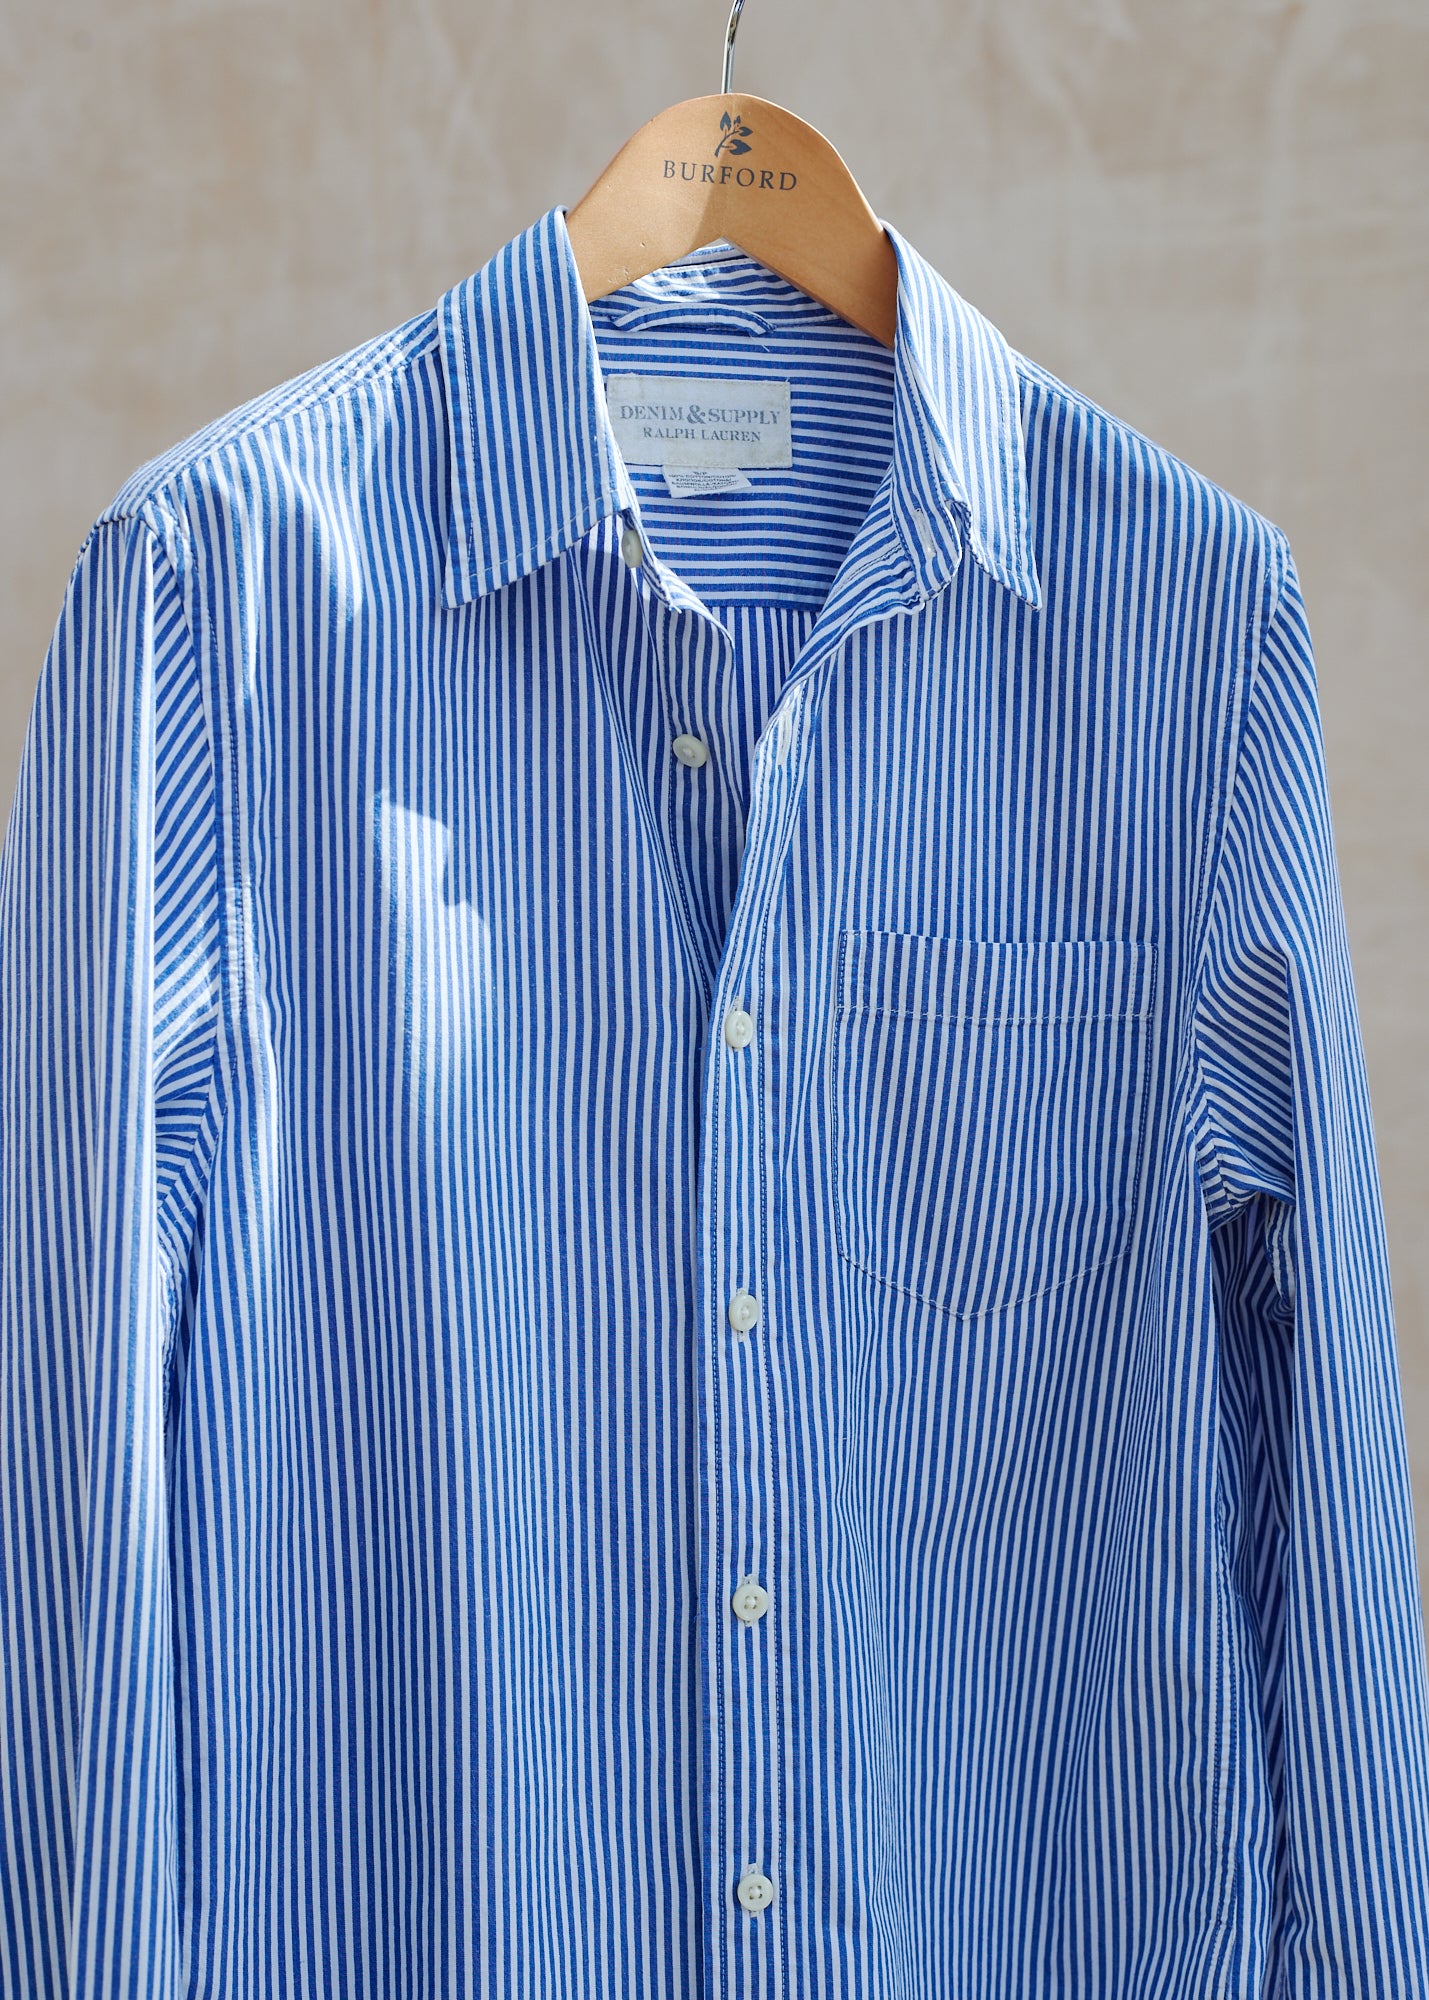 Ralph Lauren Blue & White Striped Cotton Shirt - S